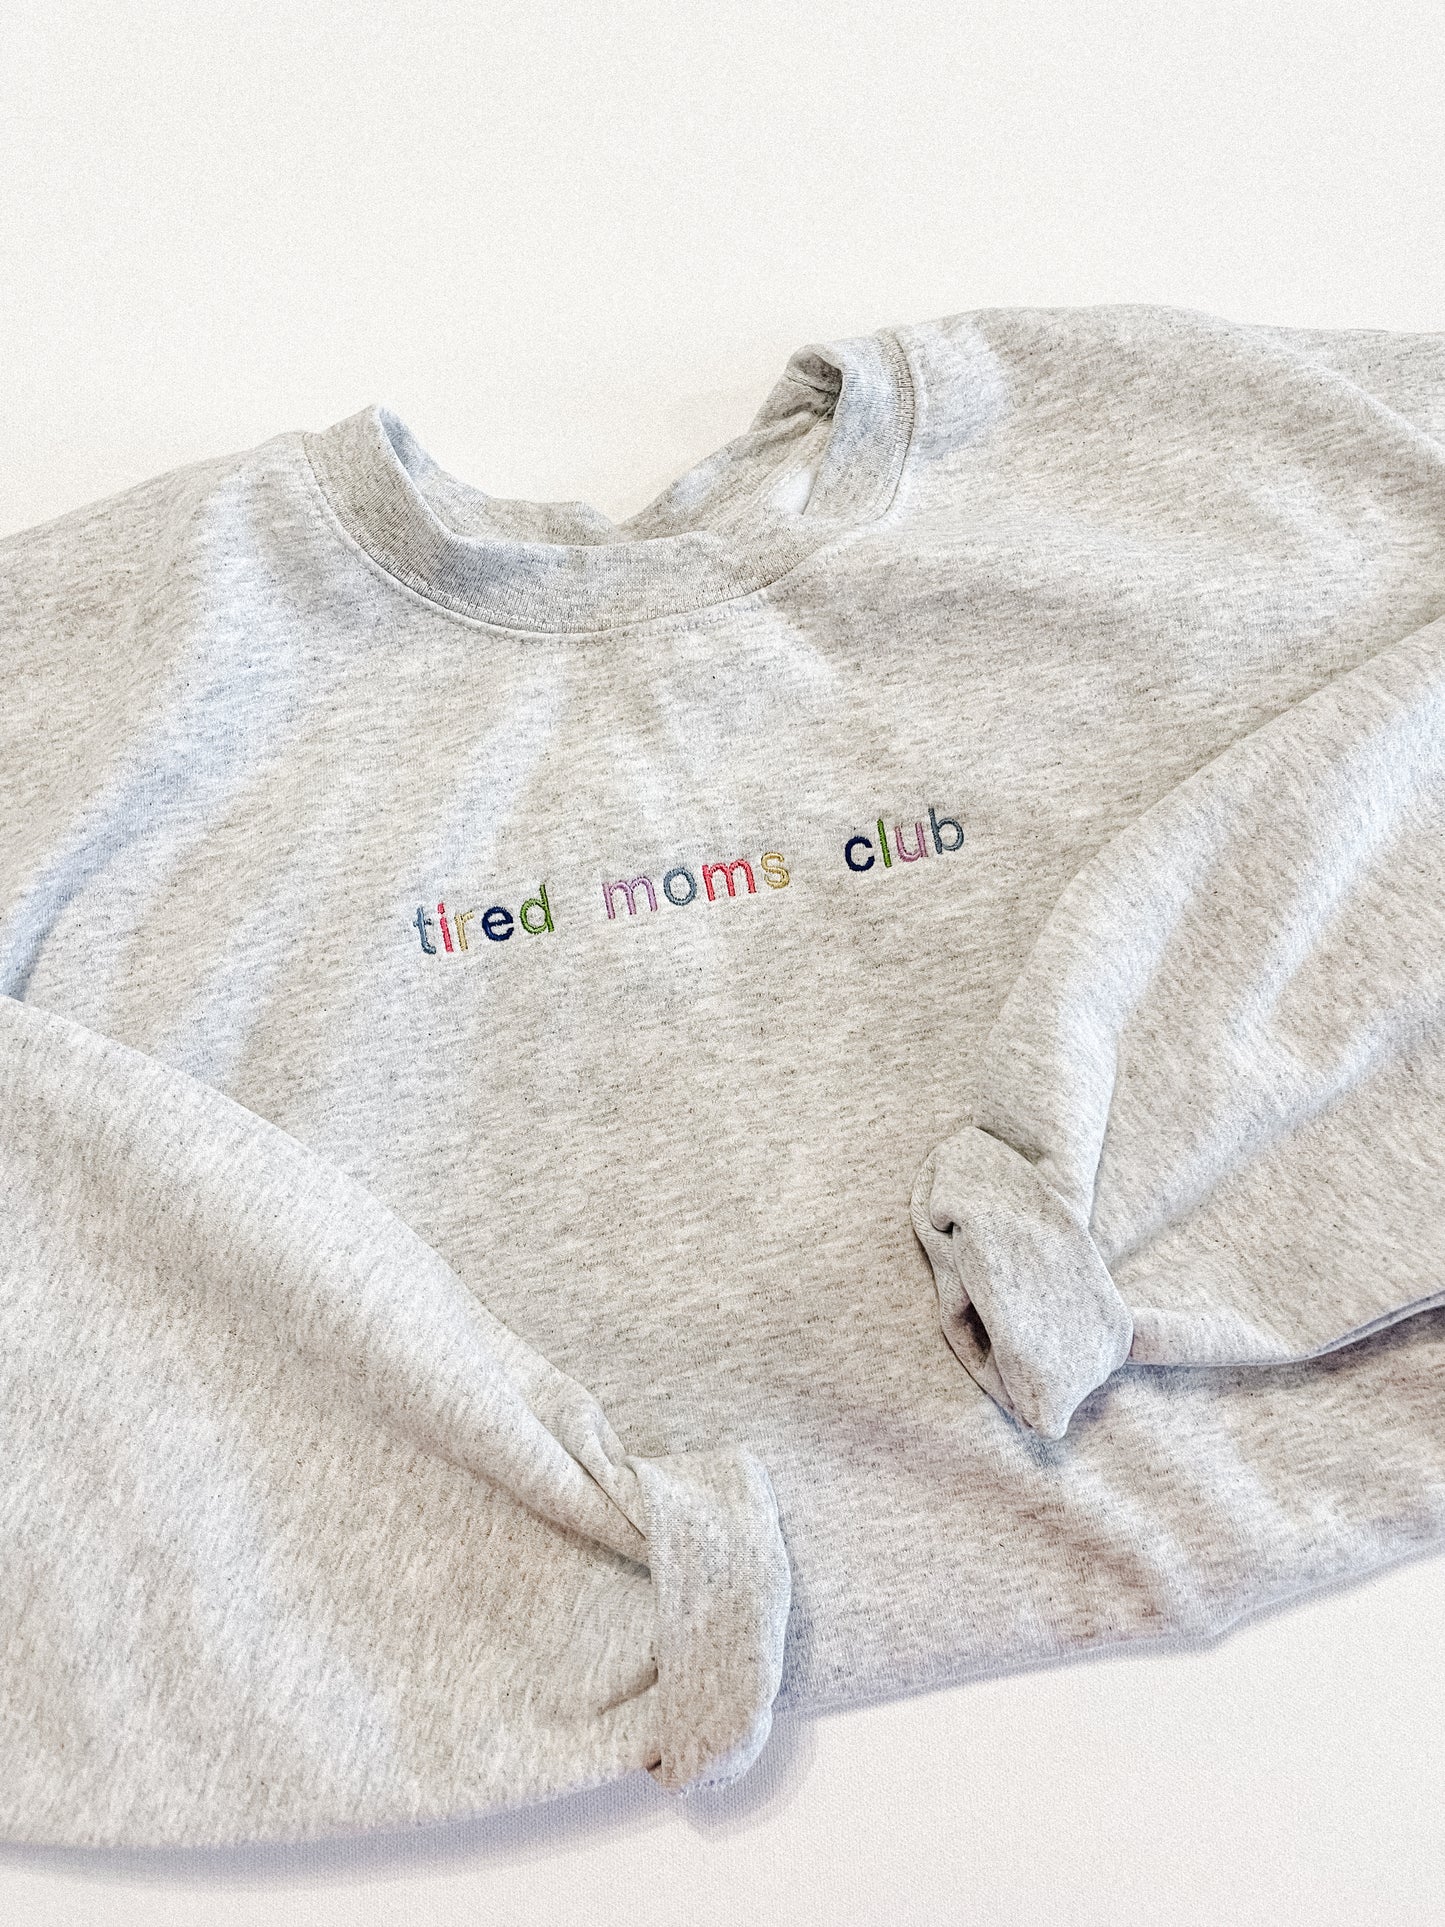 tired moms club sweatshirt